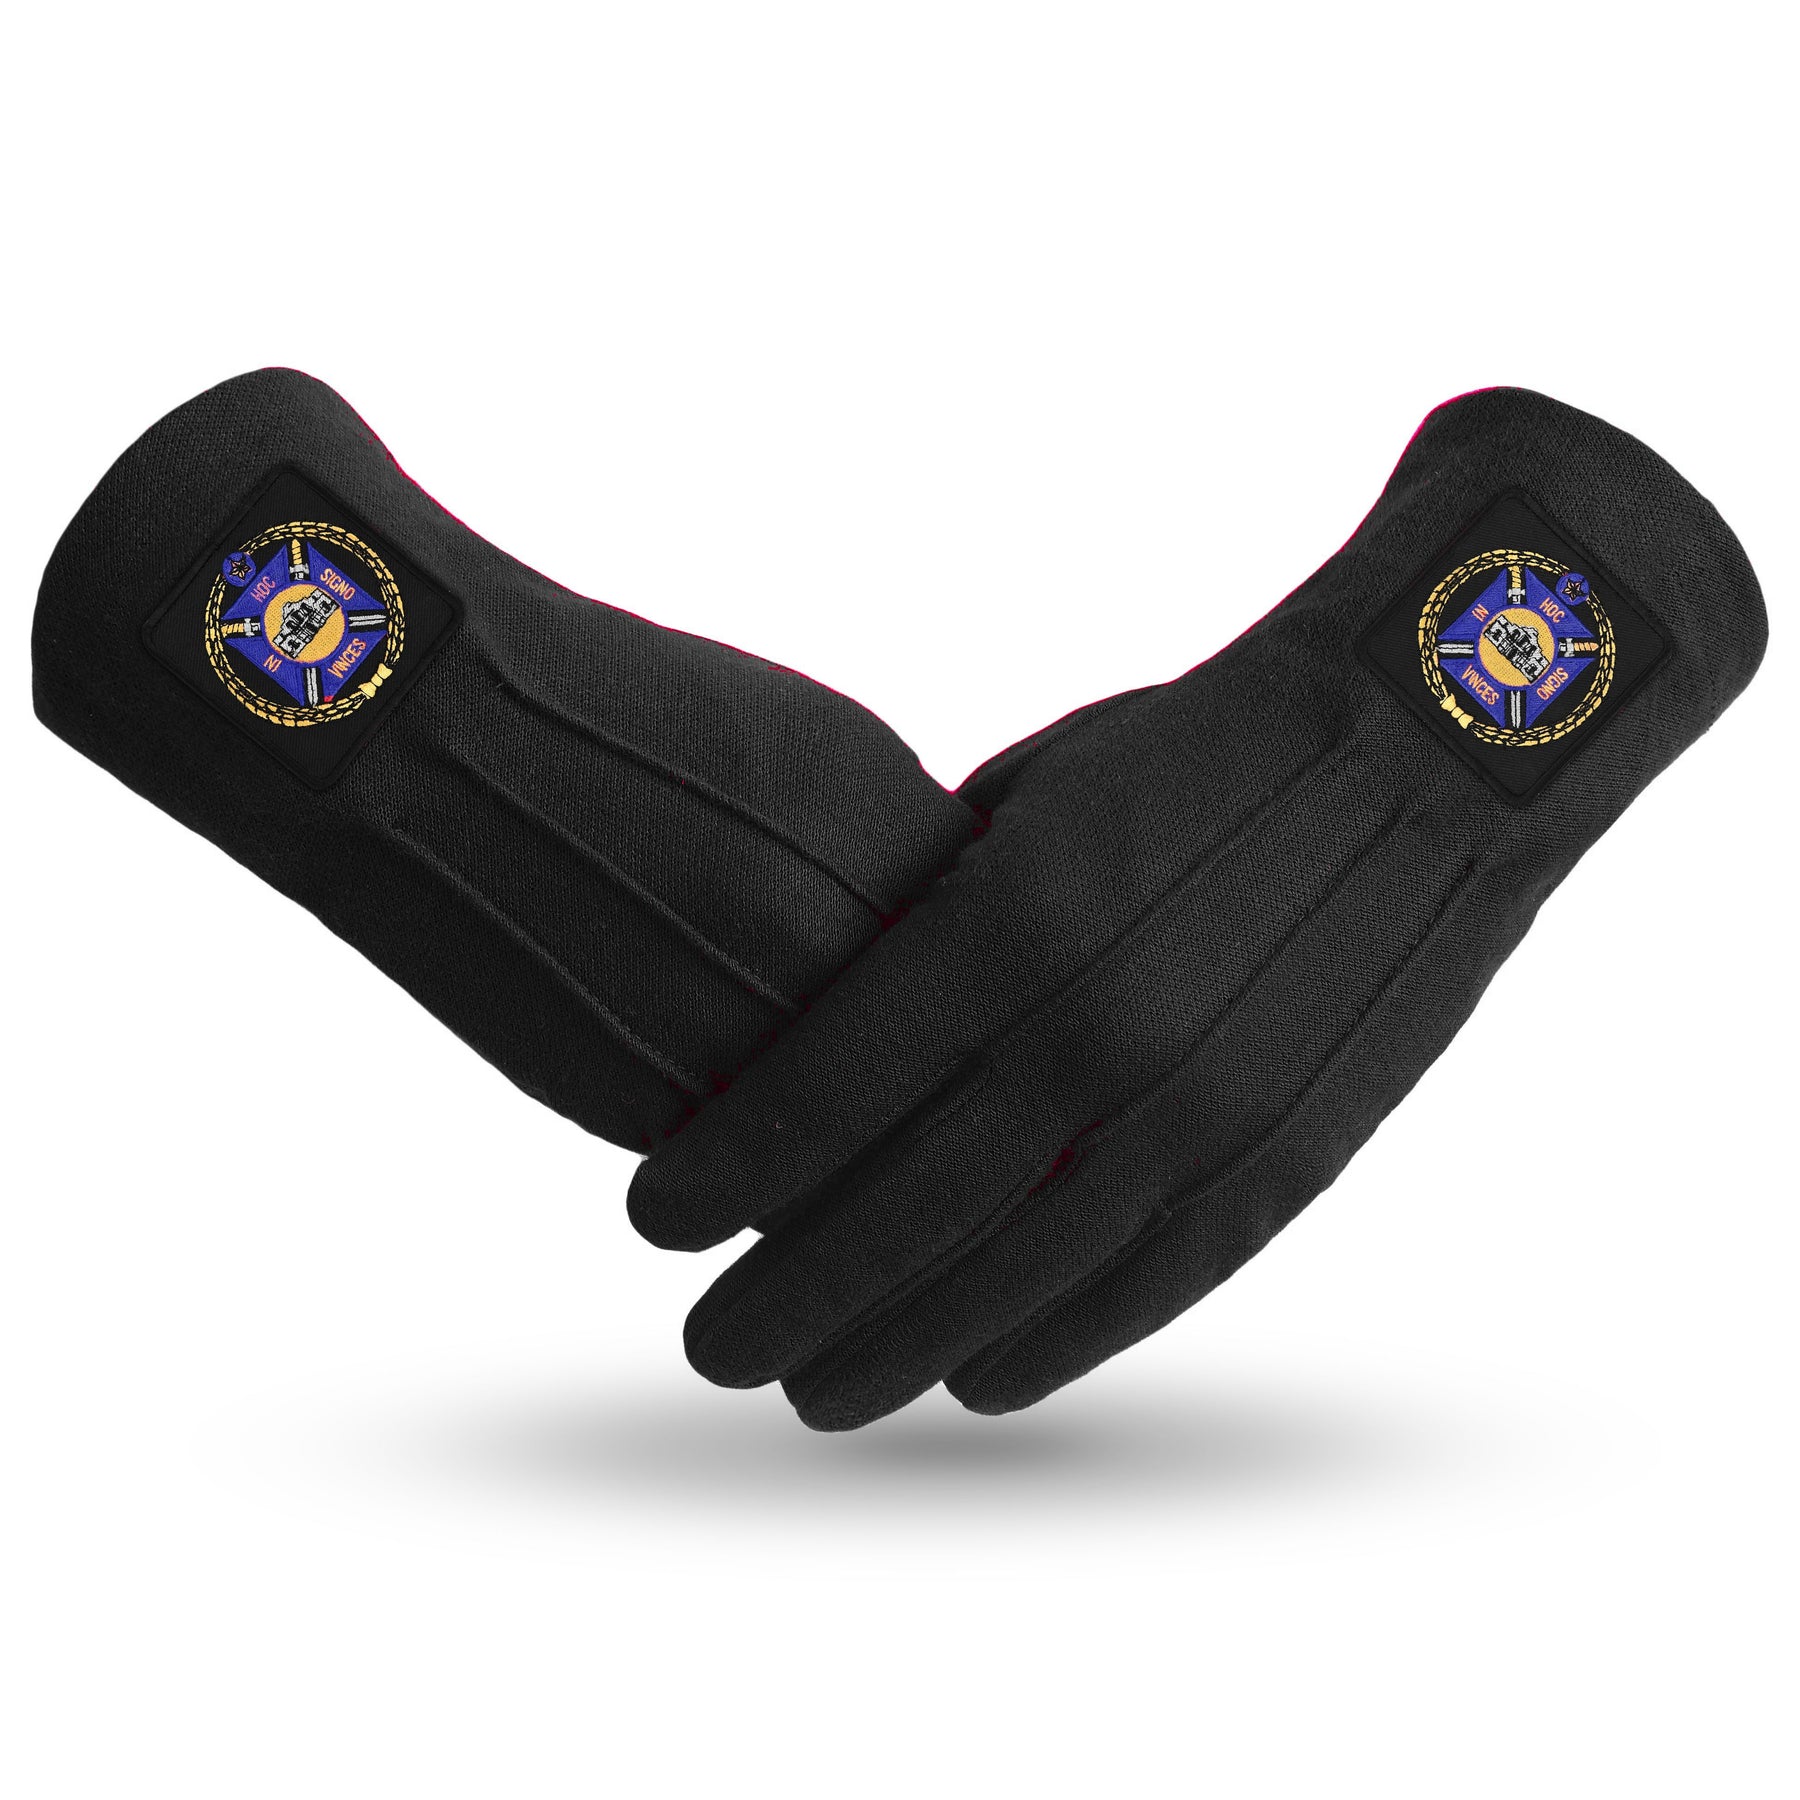 Knights Templar Commandery Glove - Black Patch With Purple Emblem - Bricks Masons